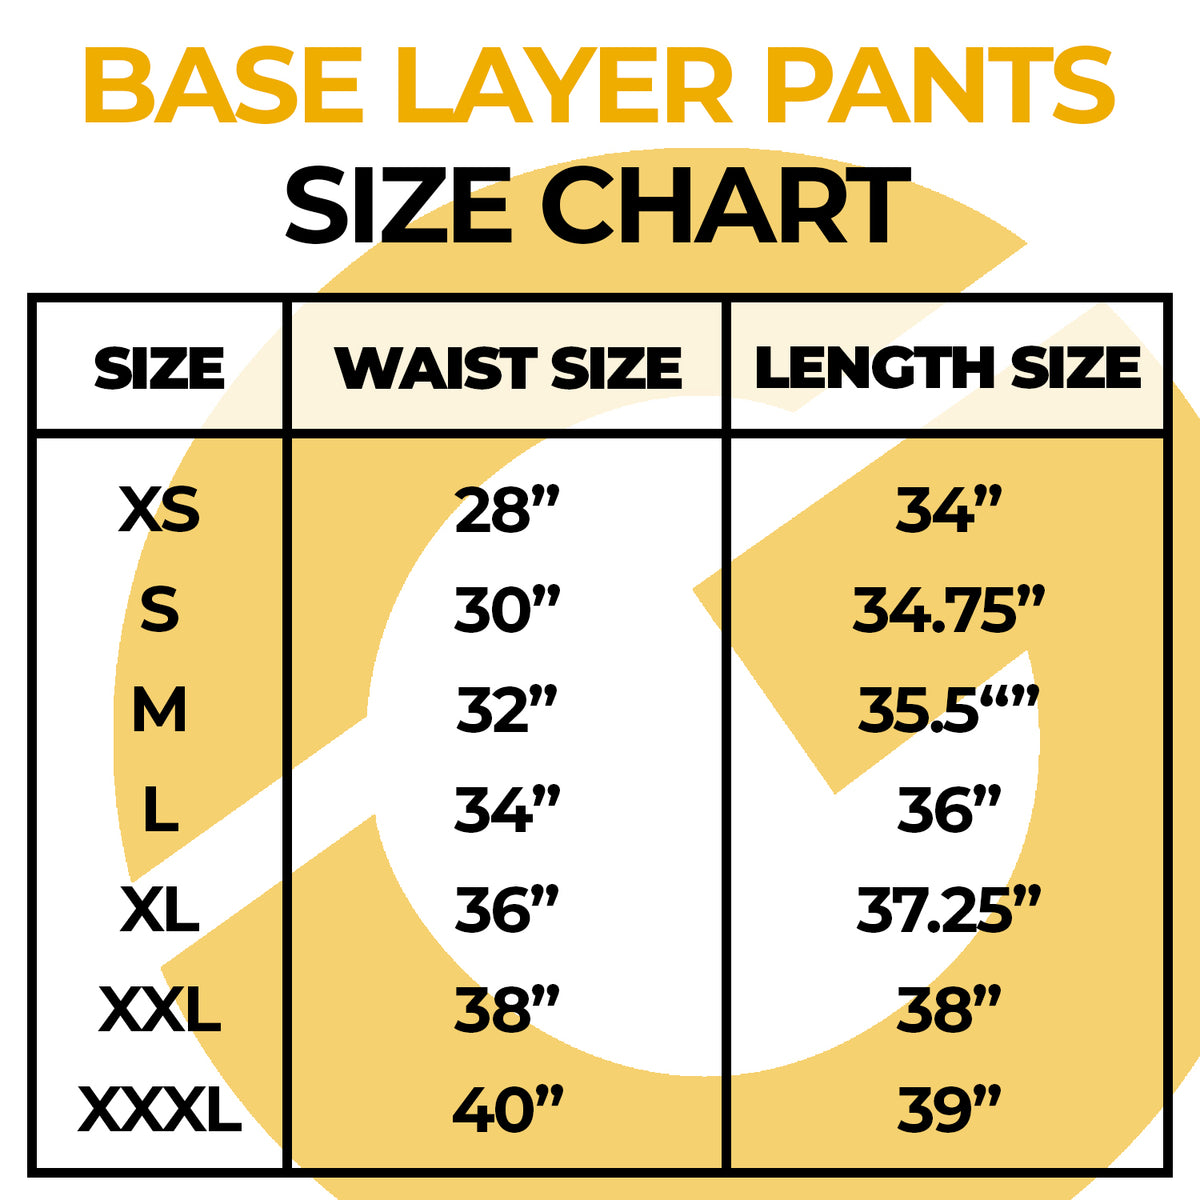 Spats / Compression Pants Sizing Chart